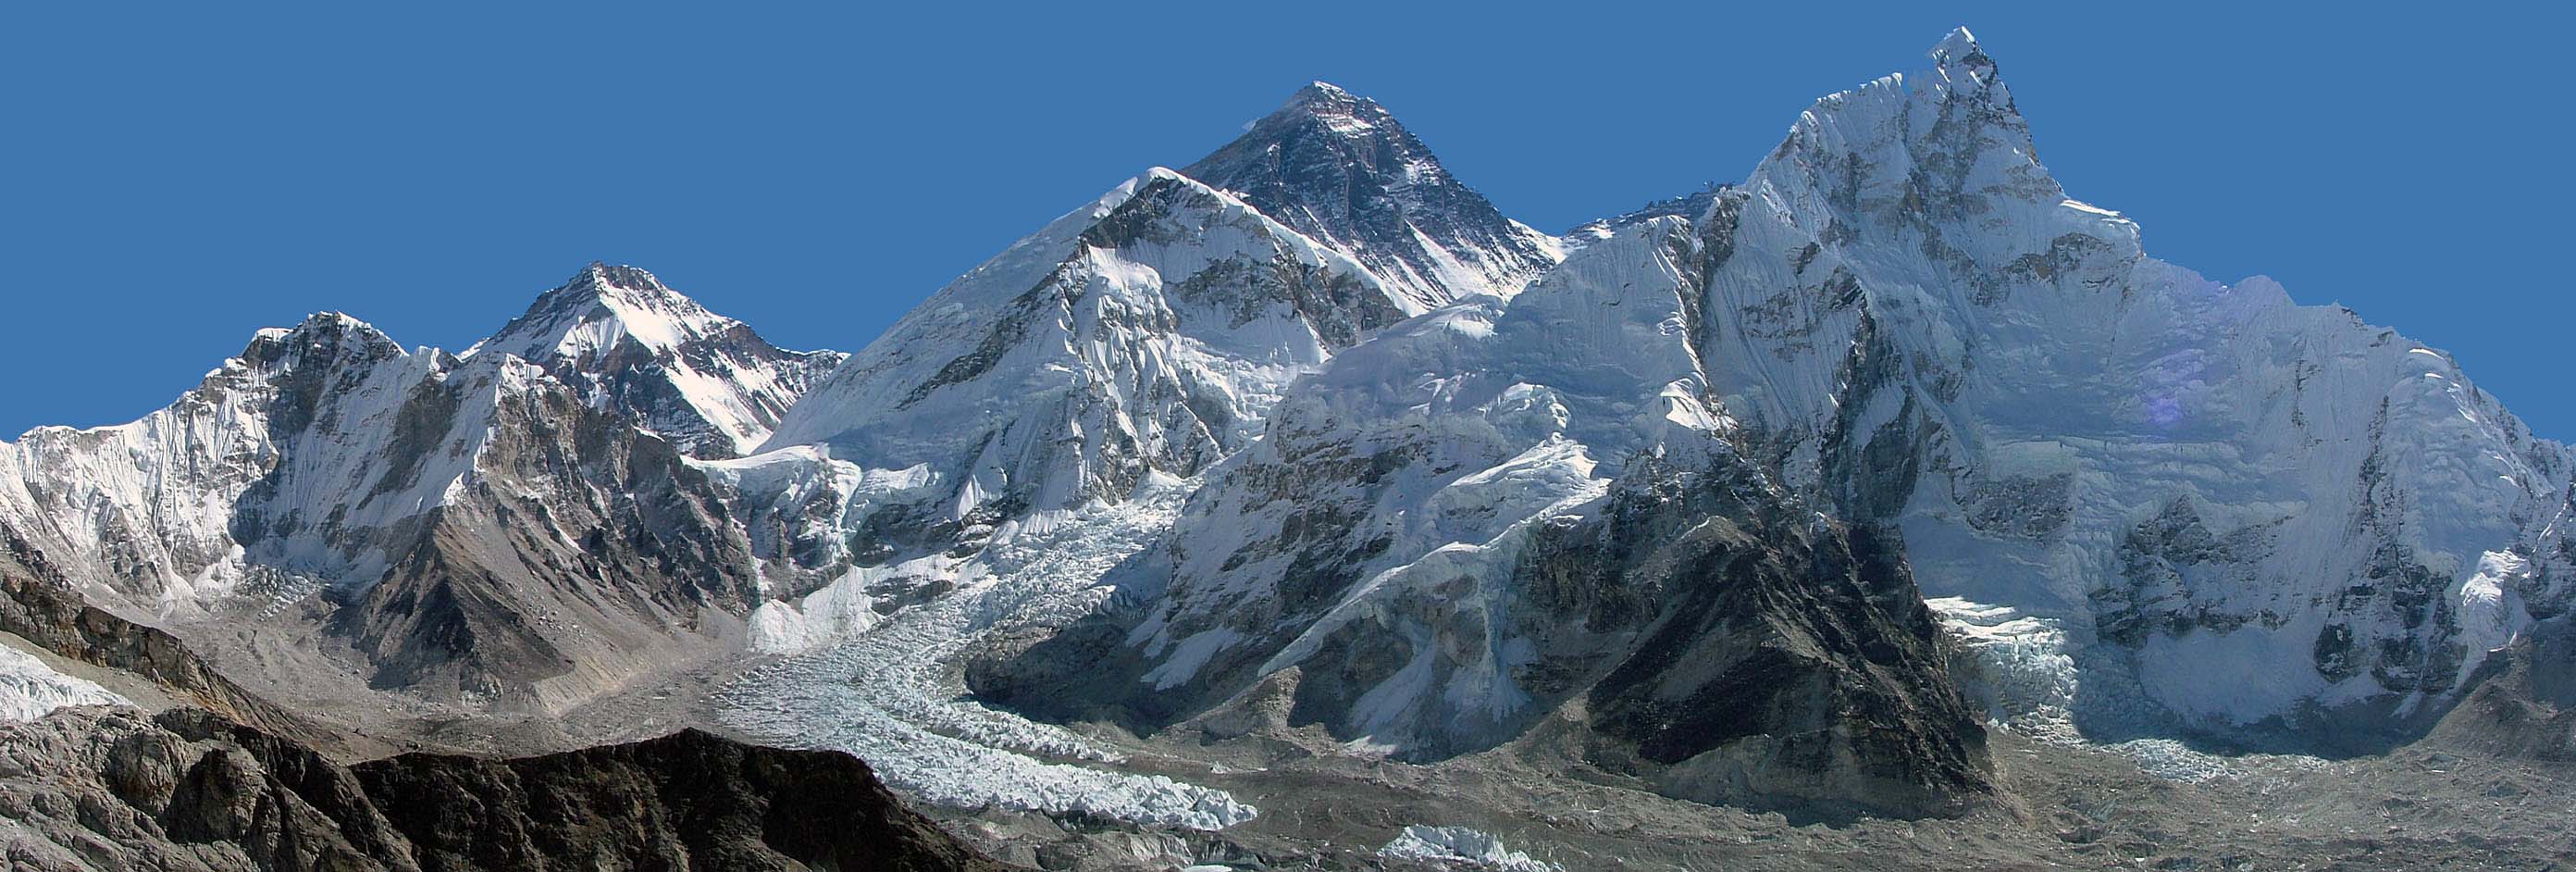 Гималаи. Эверест